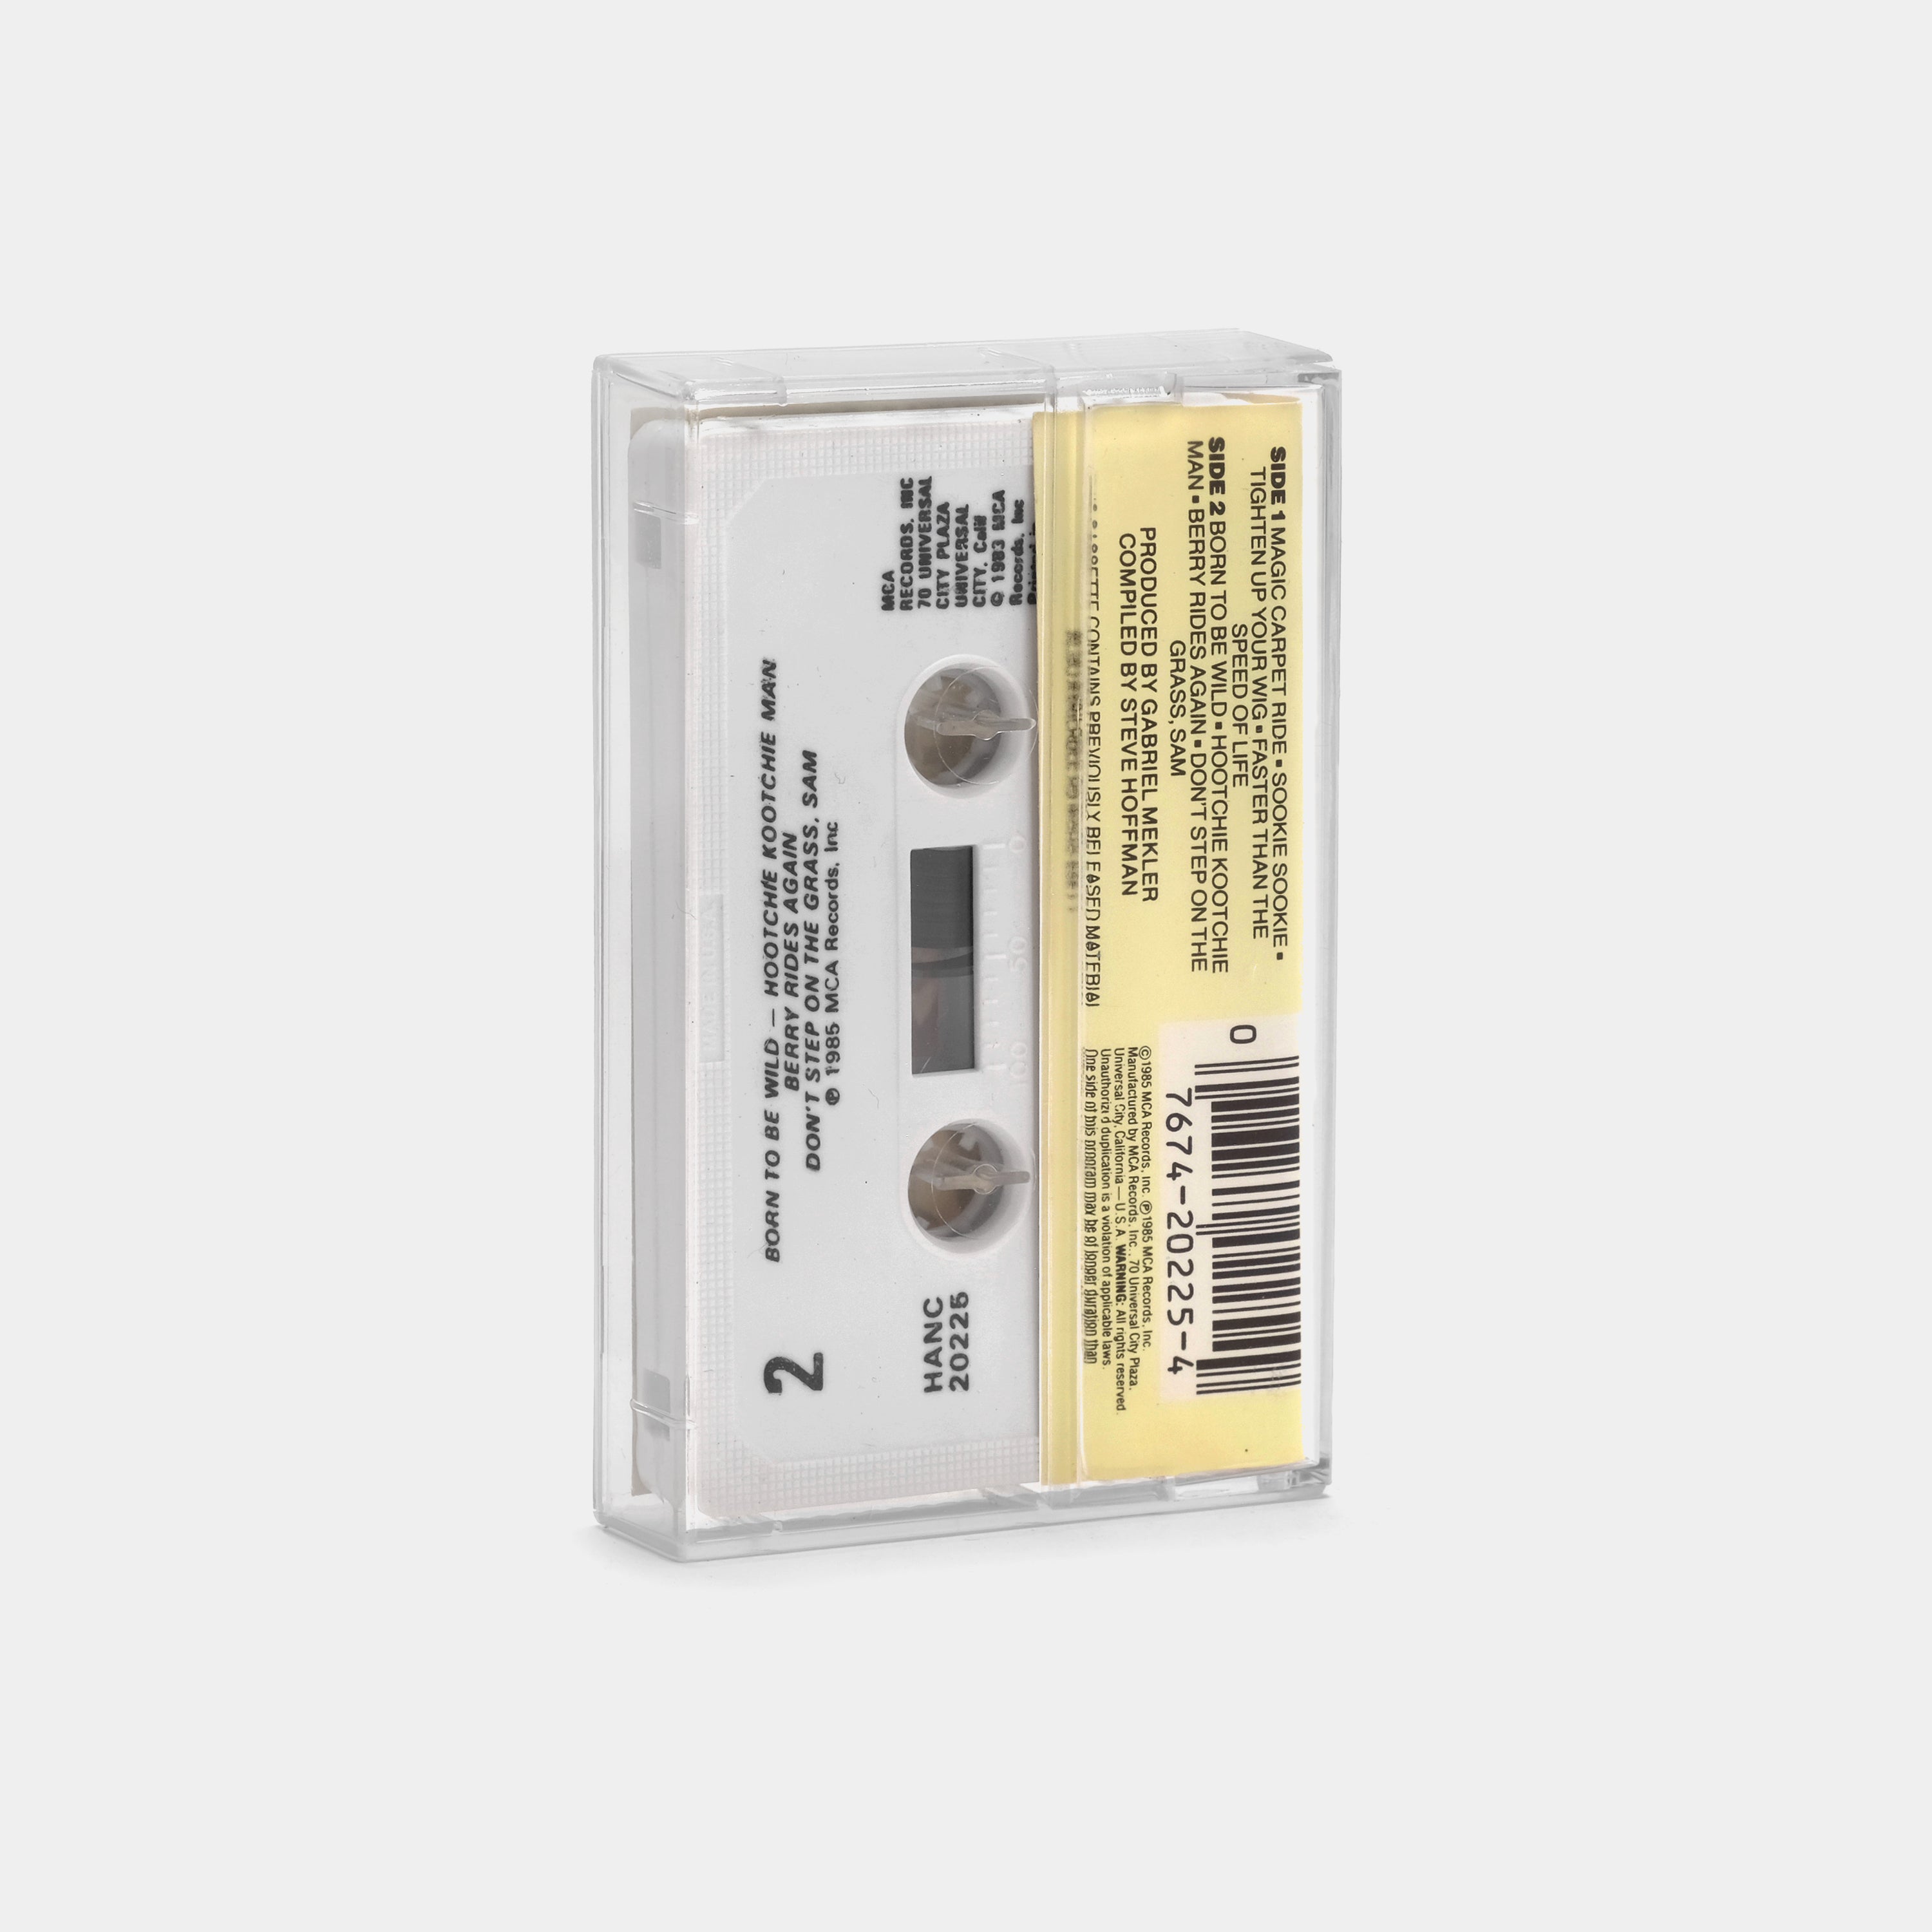 Steppenwolf - The Best Of Steppenwolf Cassette Tape